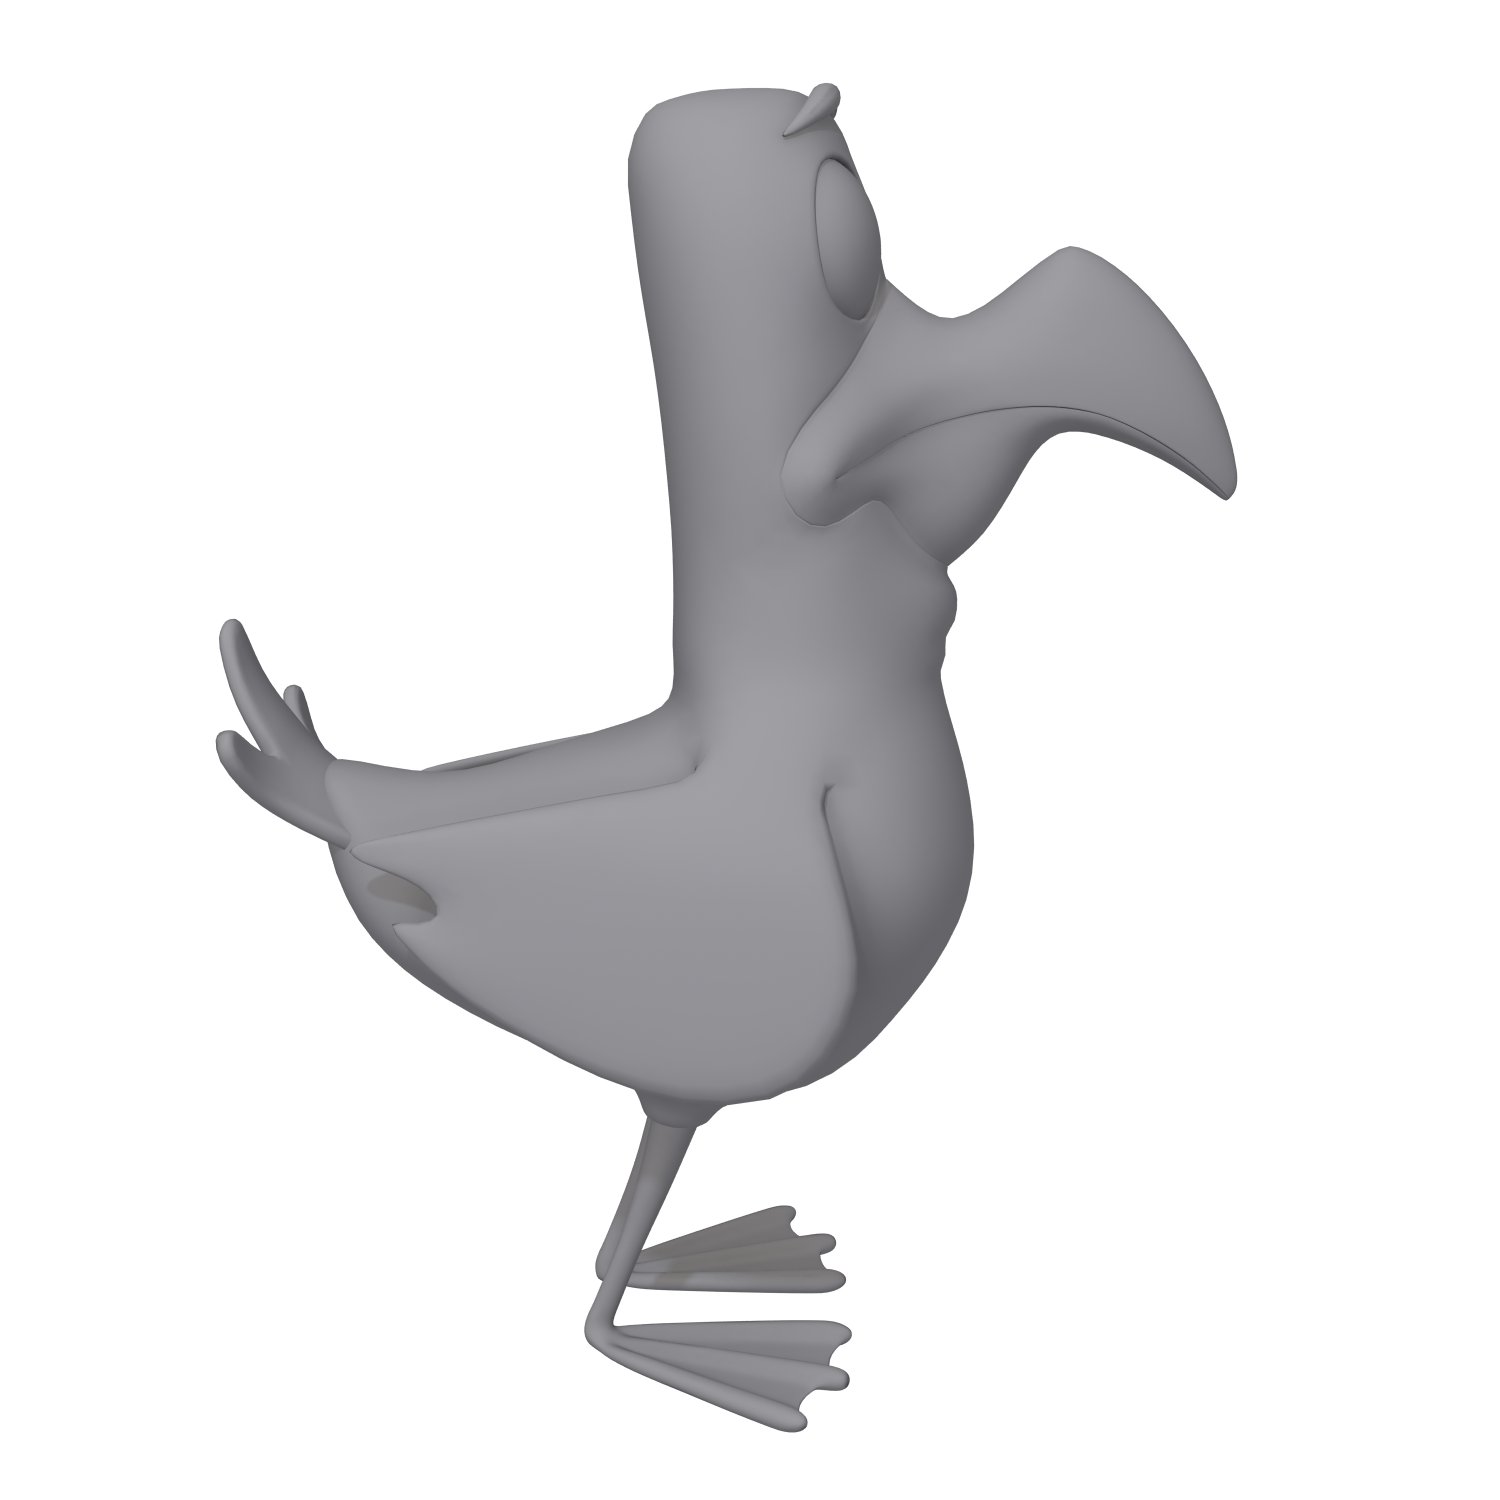 Cartoon bird 3D Model $10 - .max .3ds .obj - Free3D